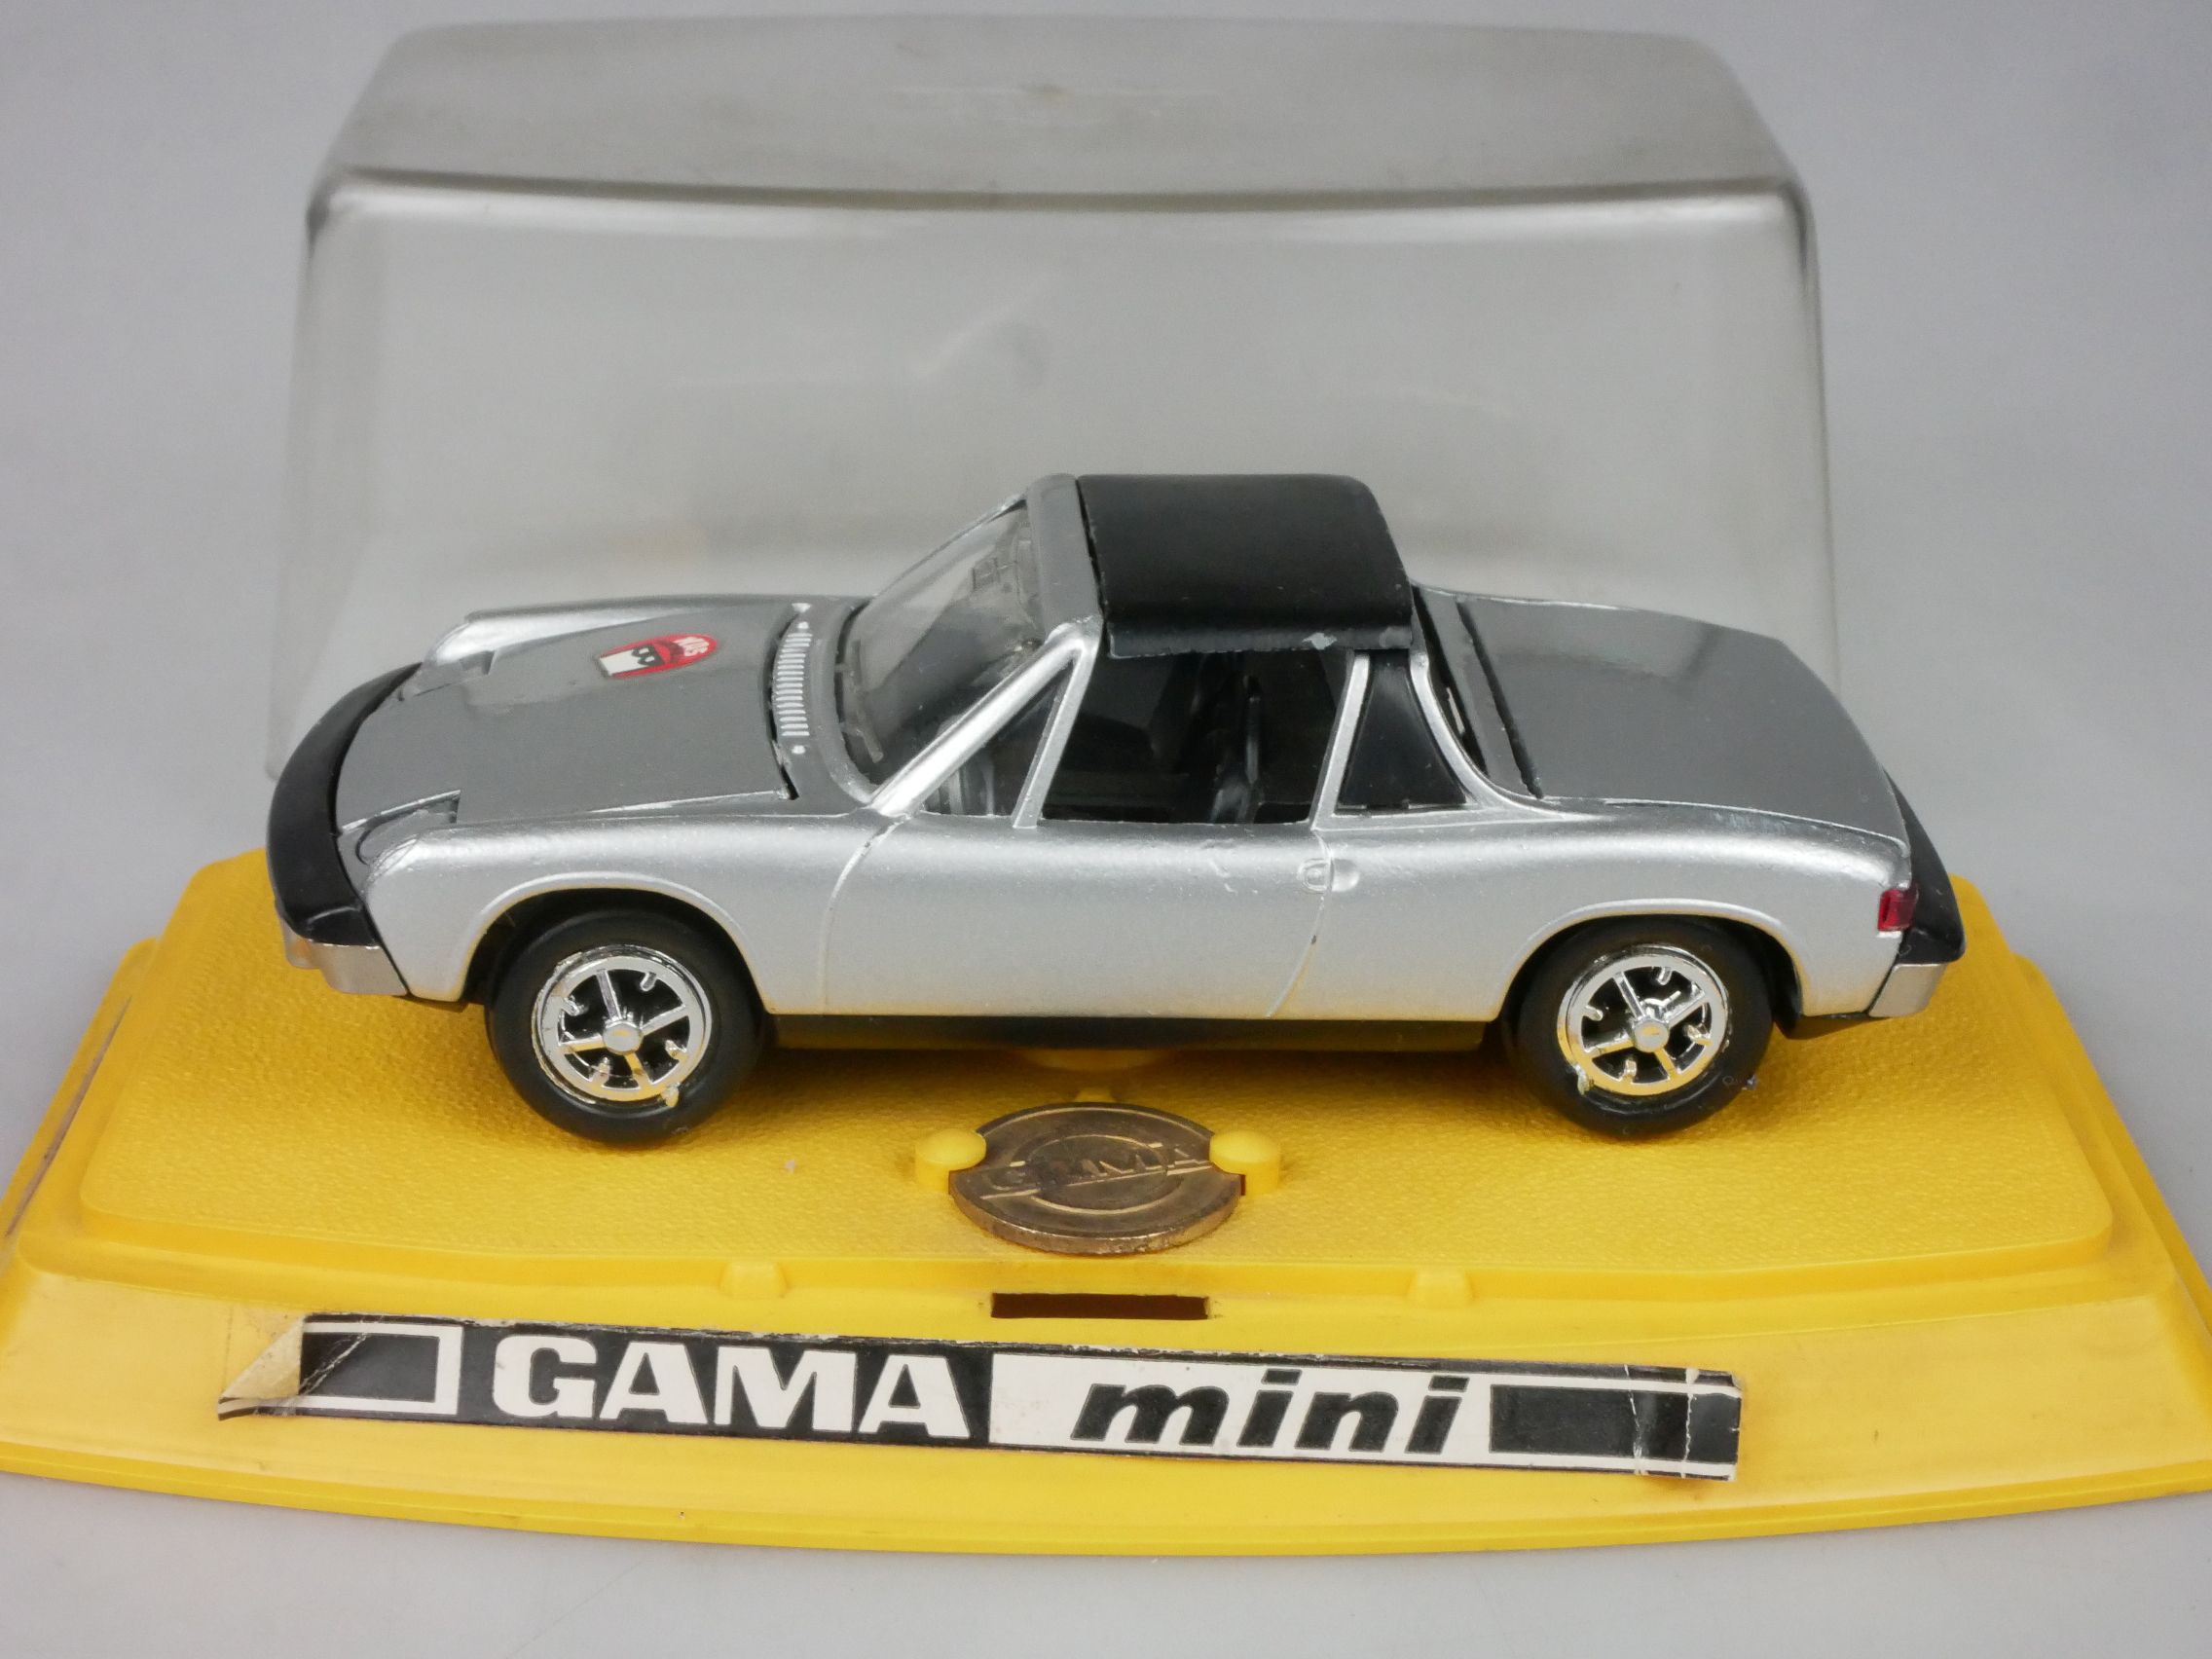 Gama Mini 1/43 VW Porsche 914 made in w. germany 9820 Vitrine 126795